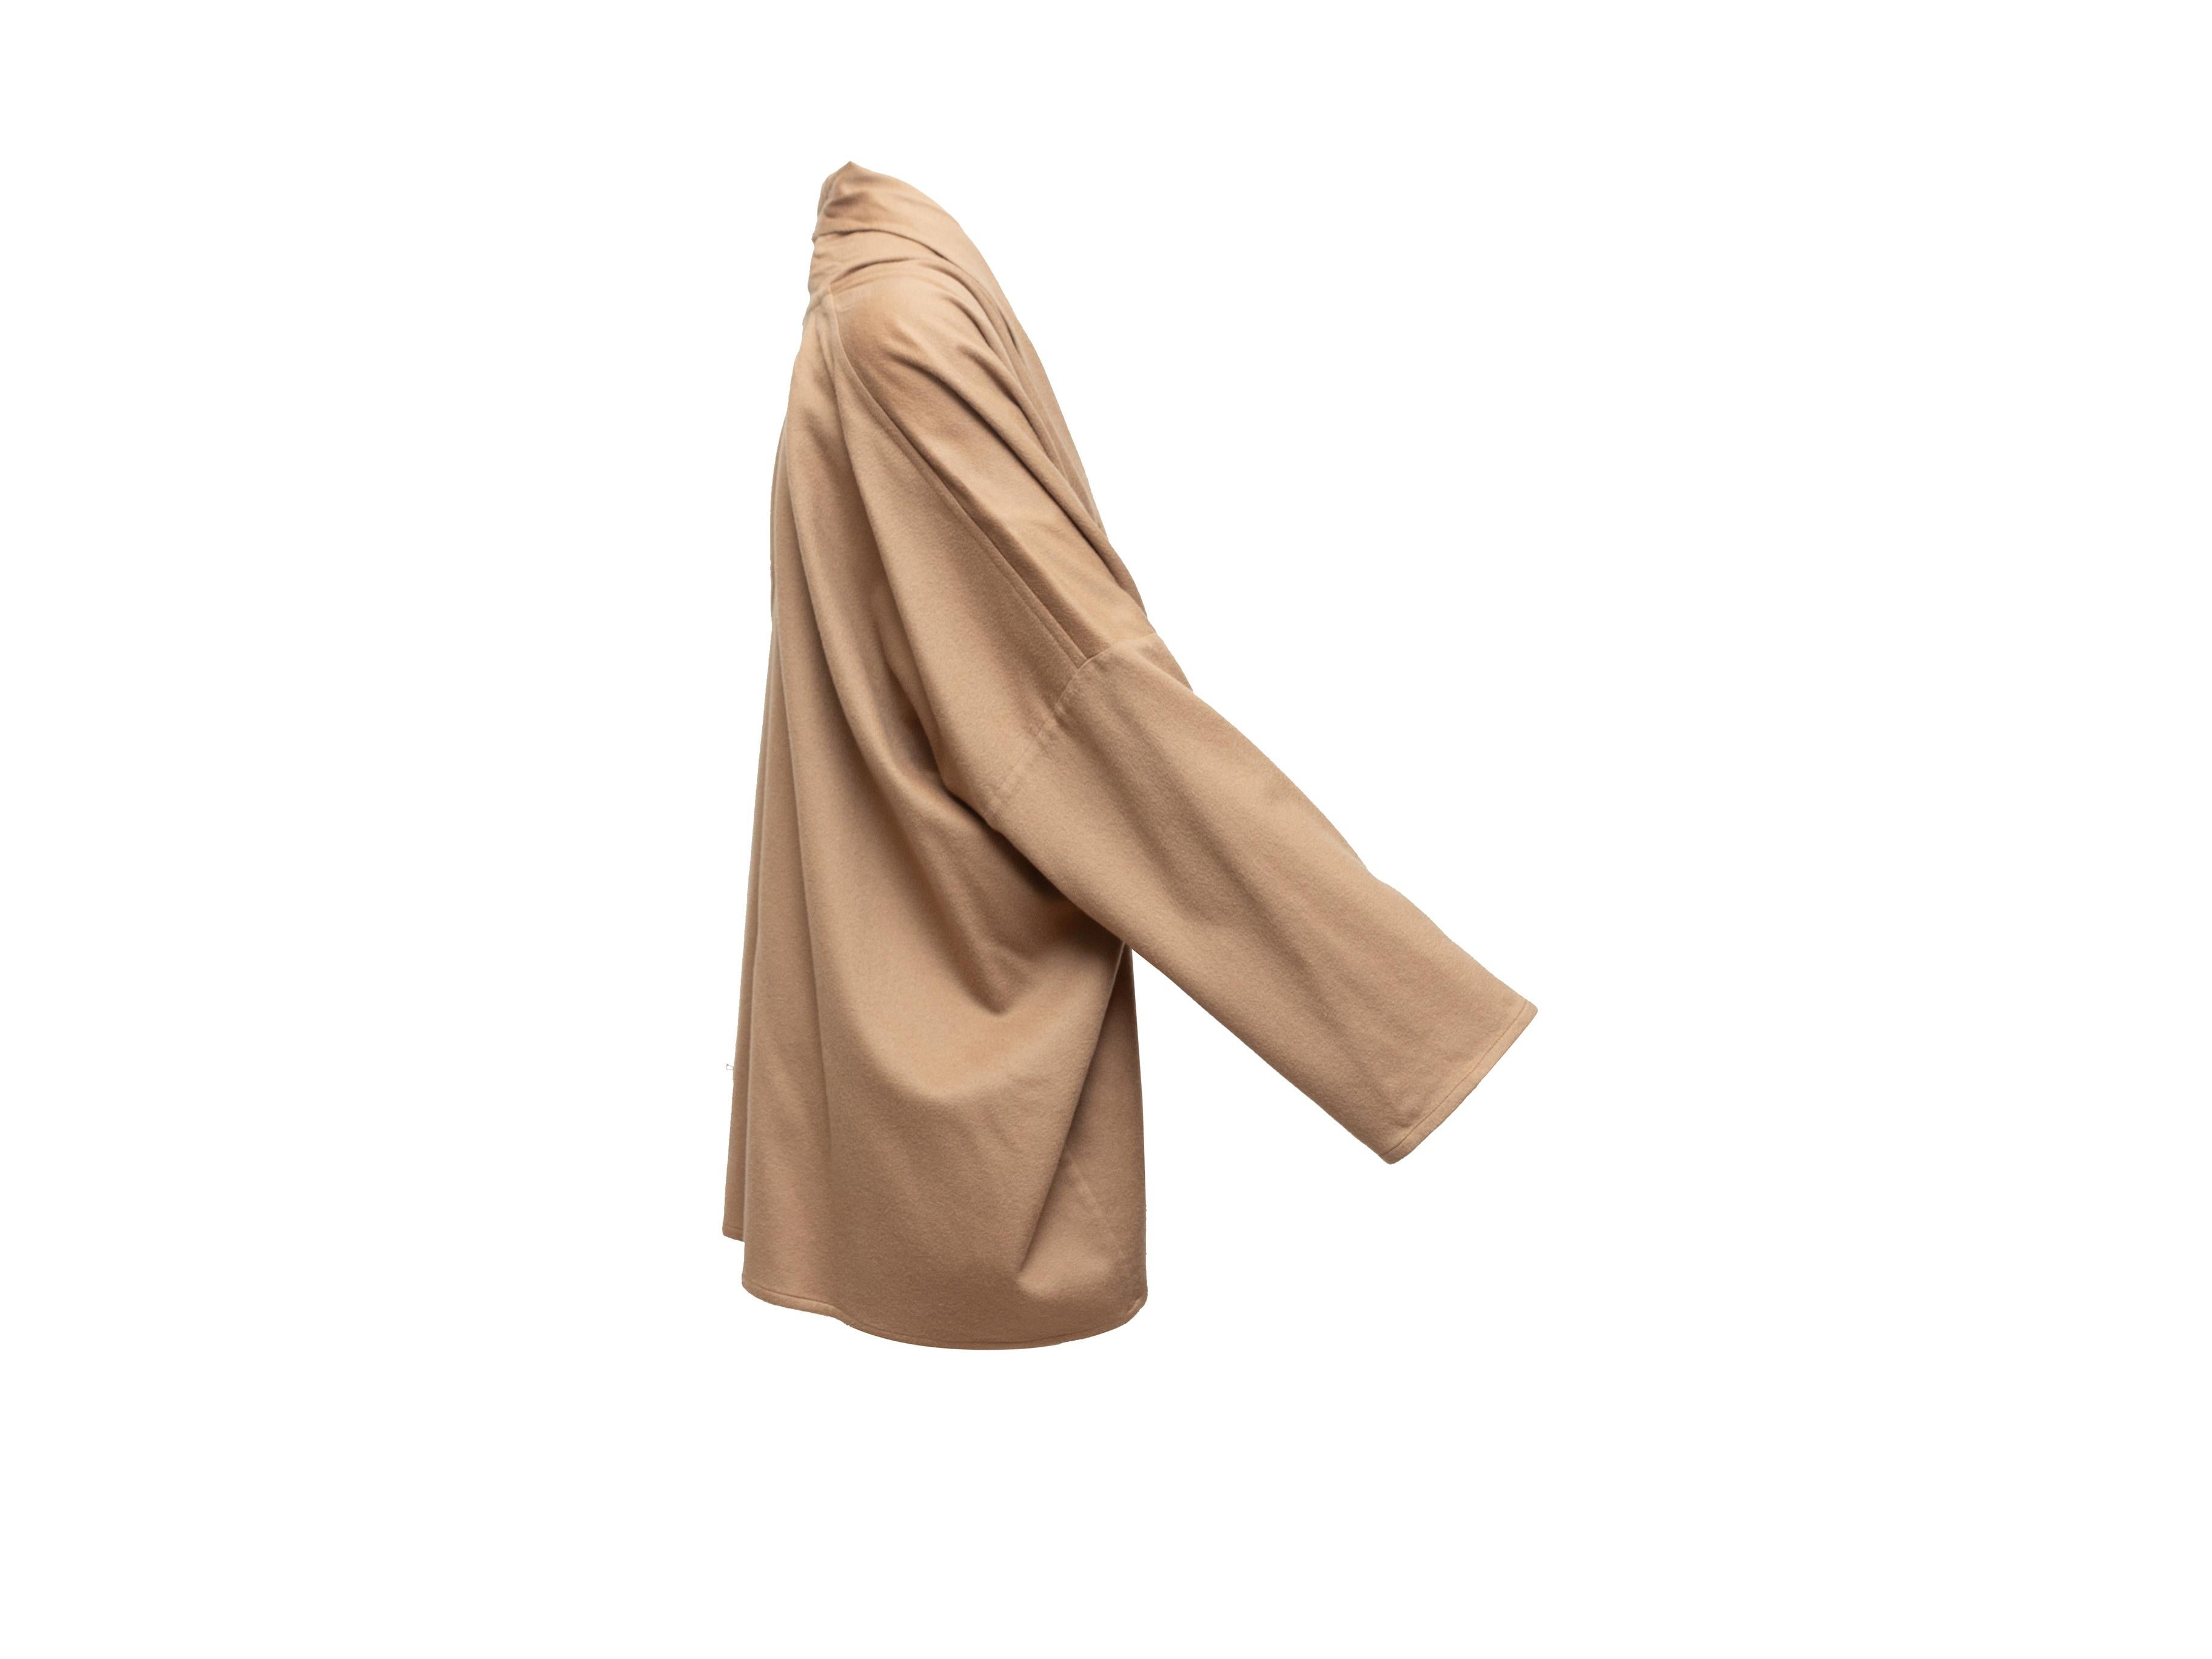 Product details: Tan cashmere open front draped jacket by Eskandar. 33.5